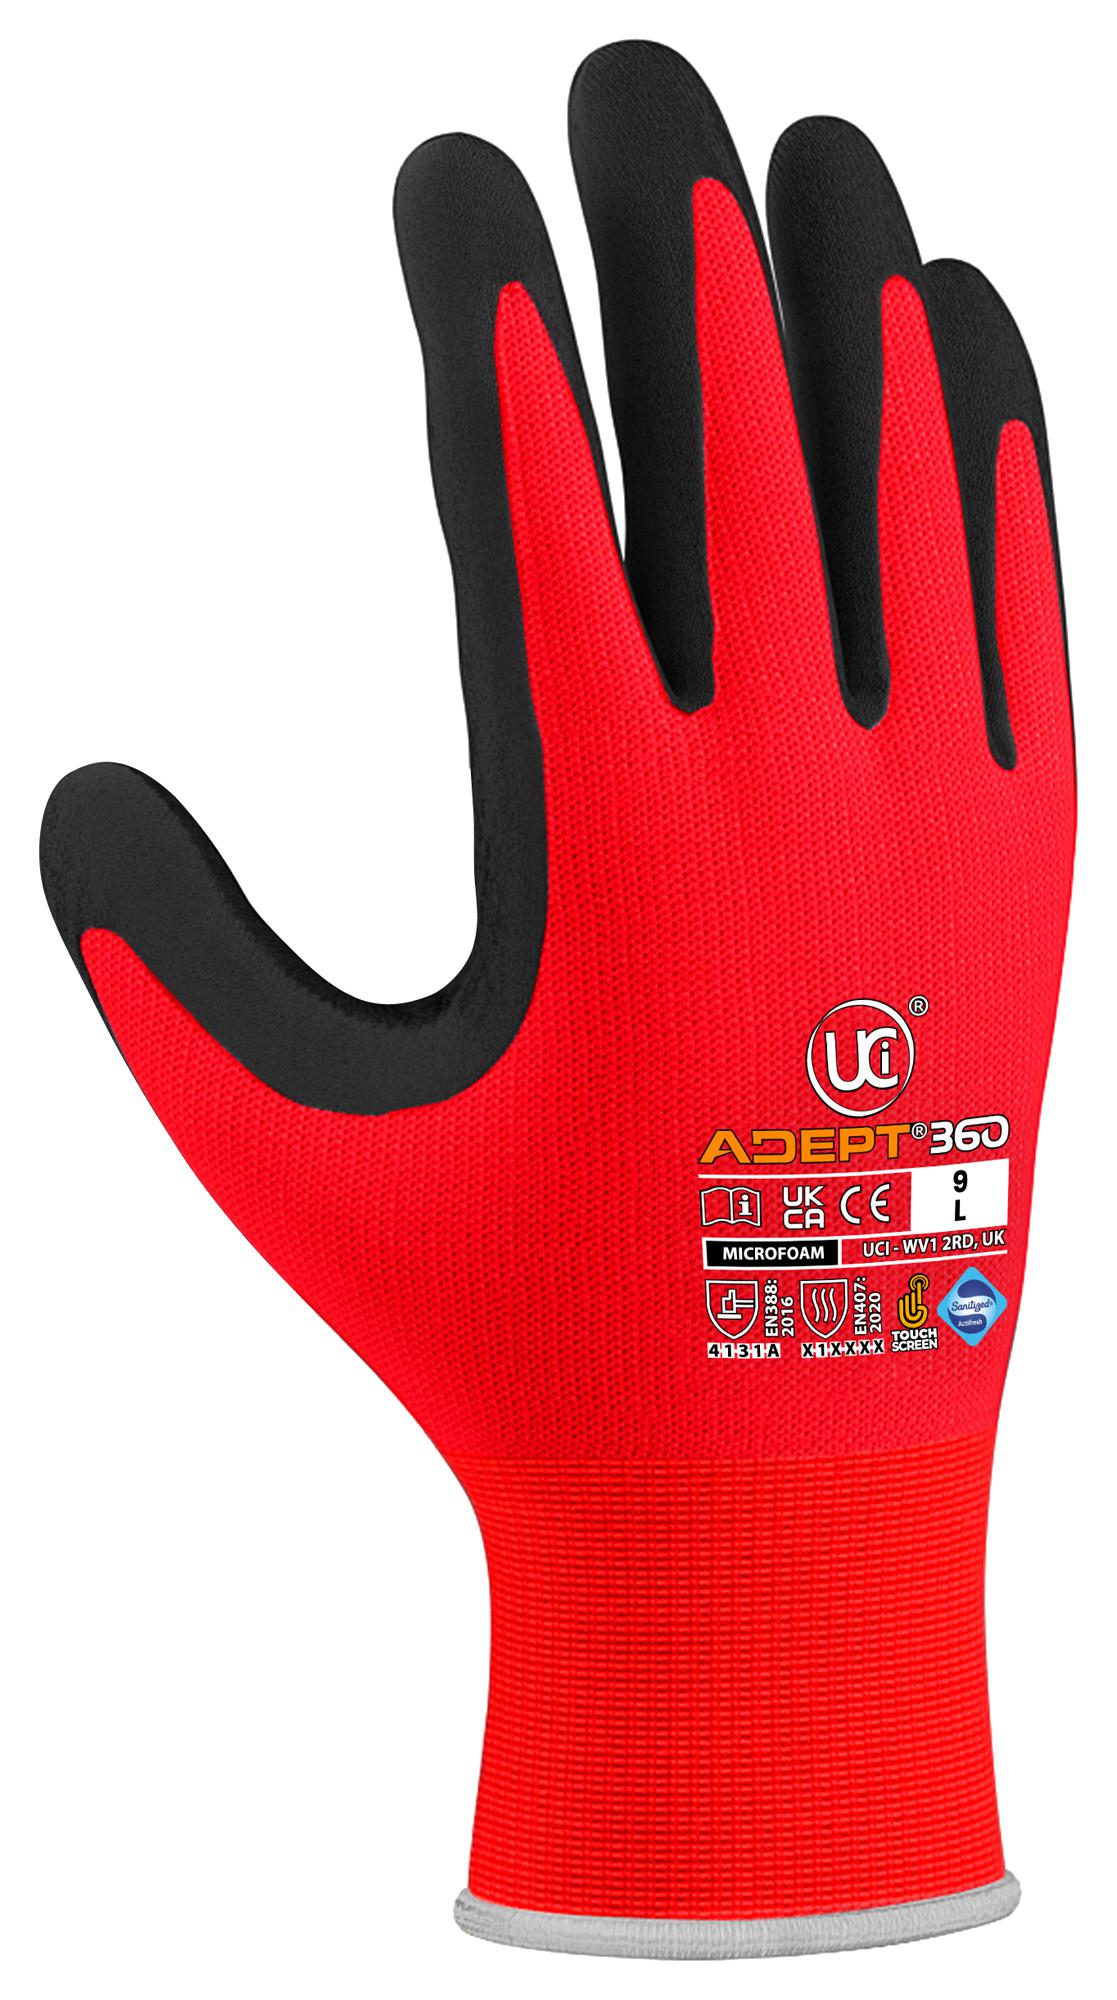 Uci G/adept360-Red/11 Gloves, Nylon/spandex, Red, Xxl